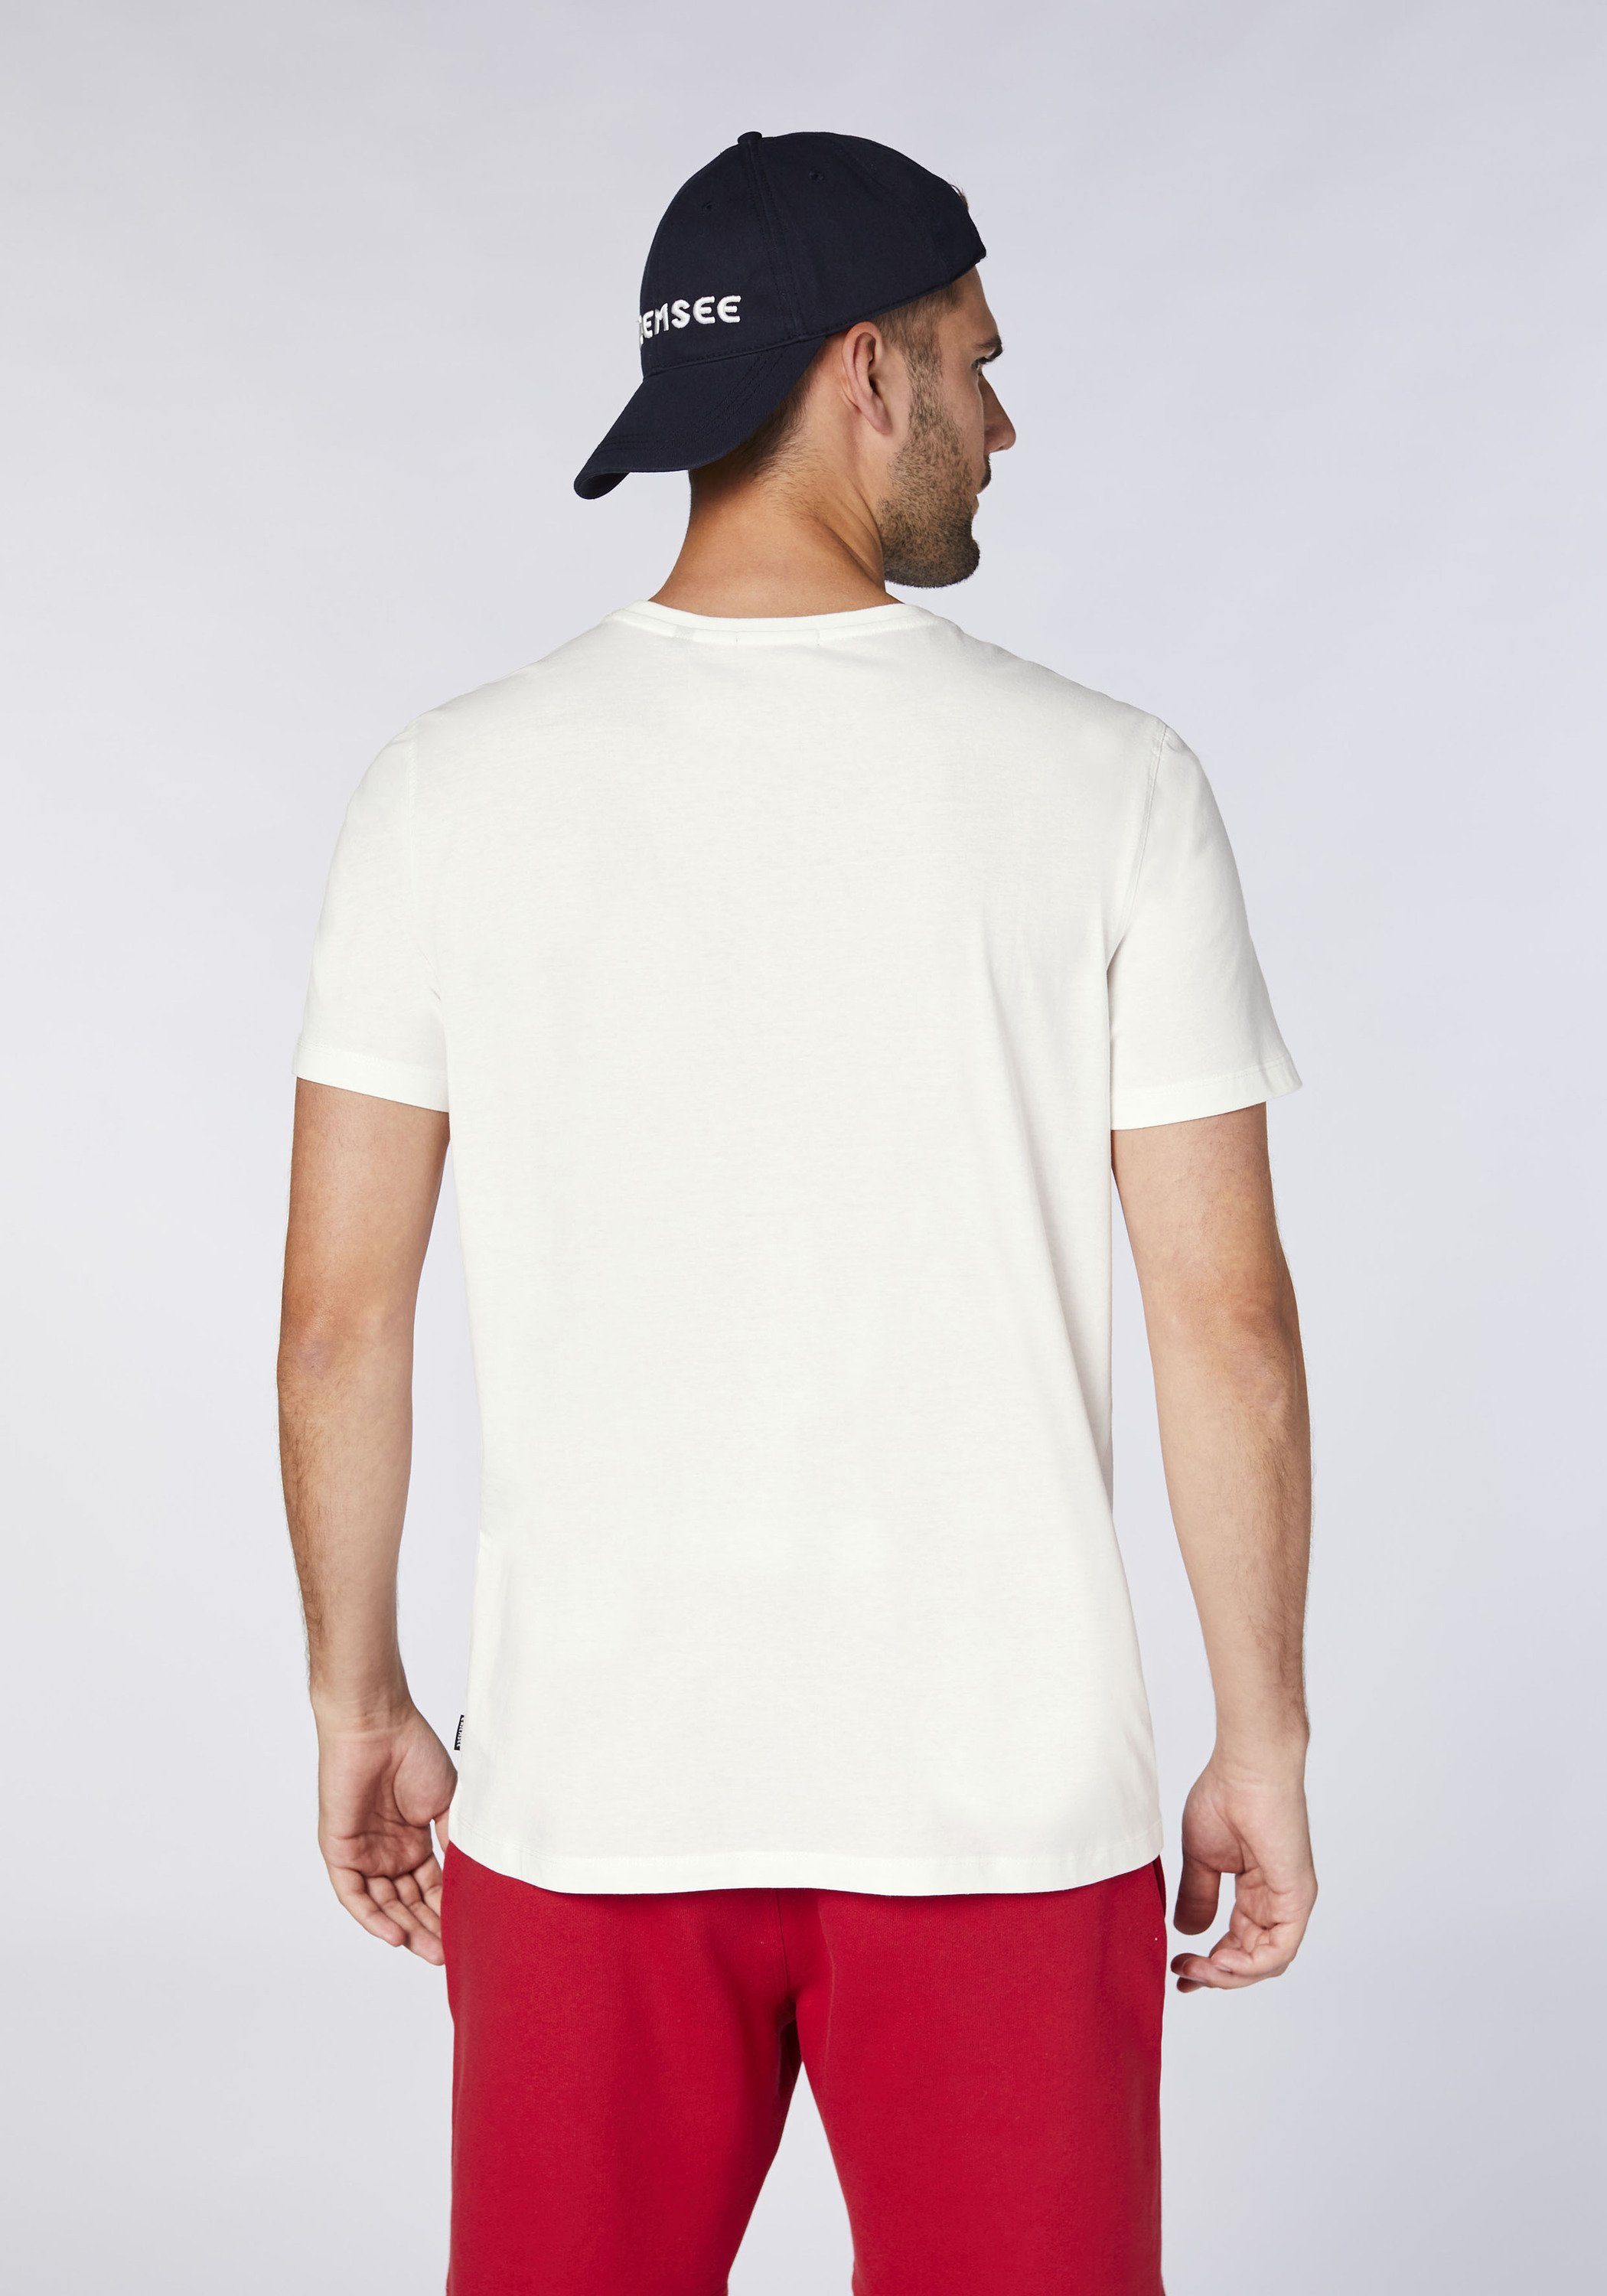 mit Star Print-Shirt T-Shirt Multicolour-Logo White Chiemsee